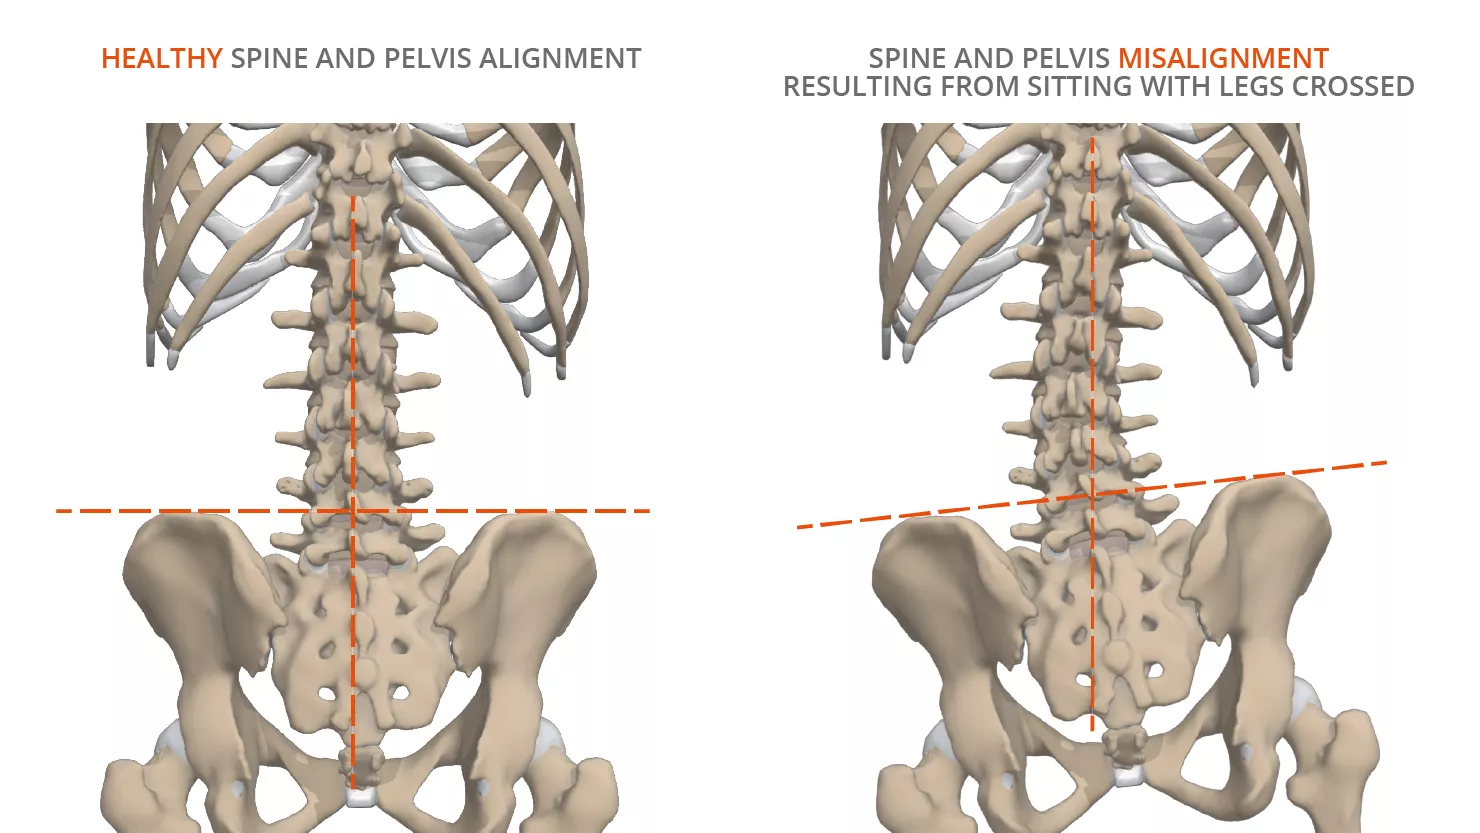 pelvis - spine - misalignment - alignment - anatomy - cross-legged - legs - crossed - Primal Pictures